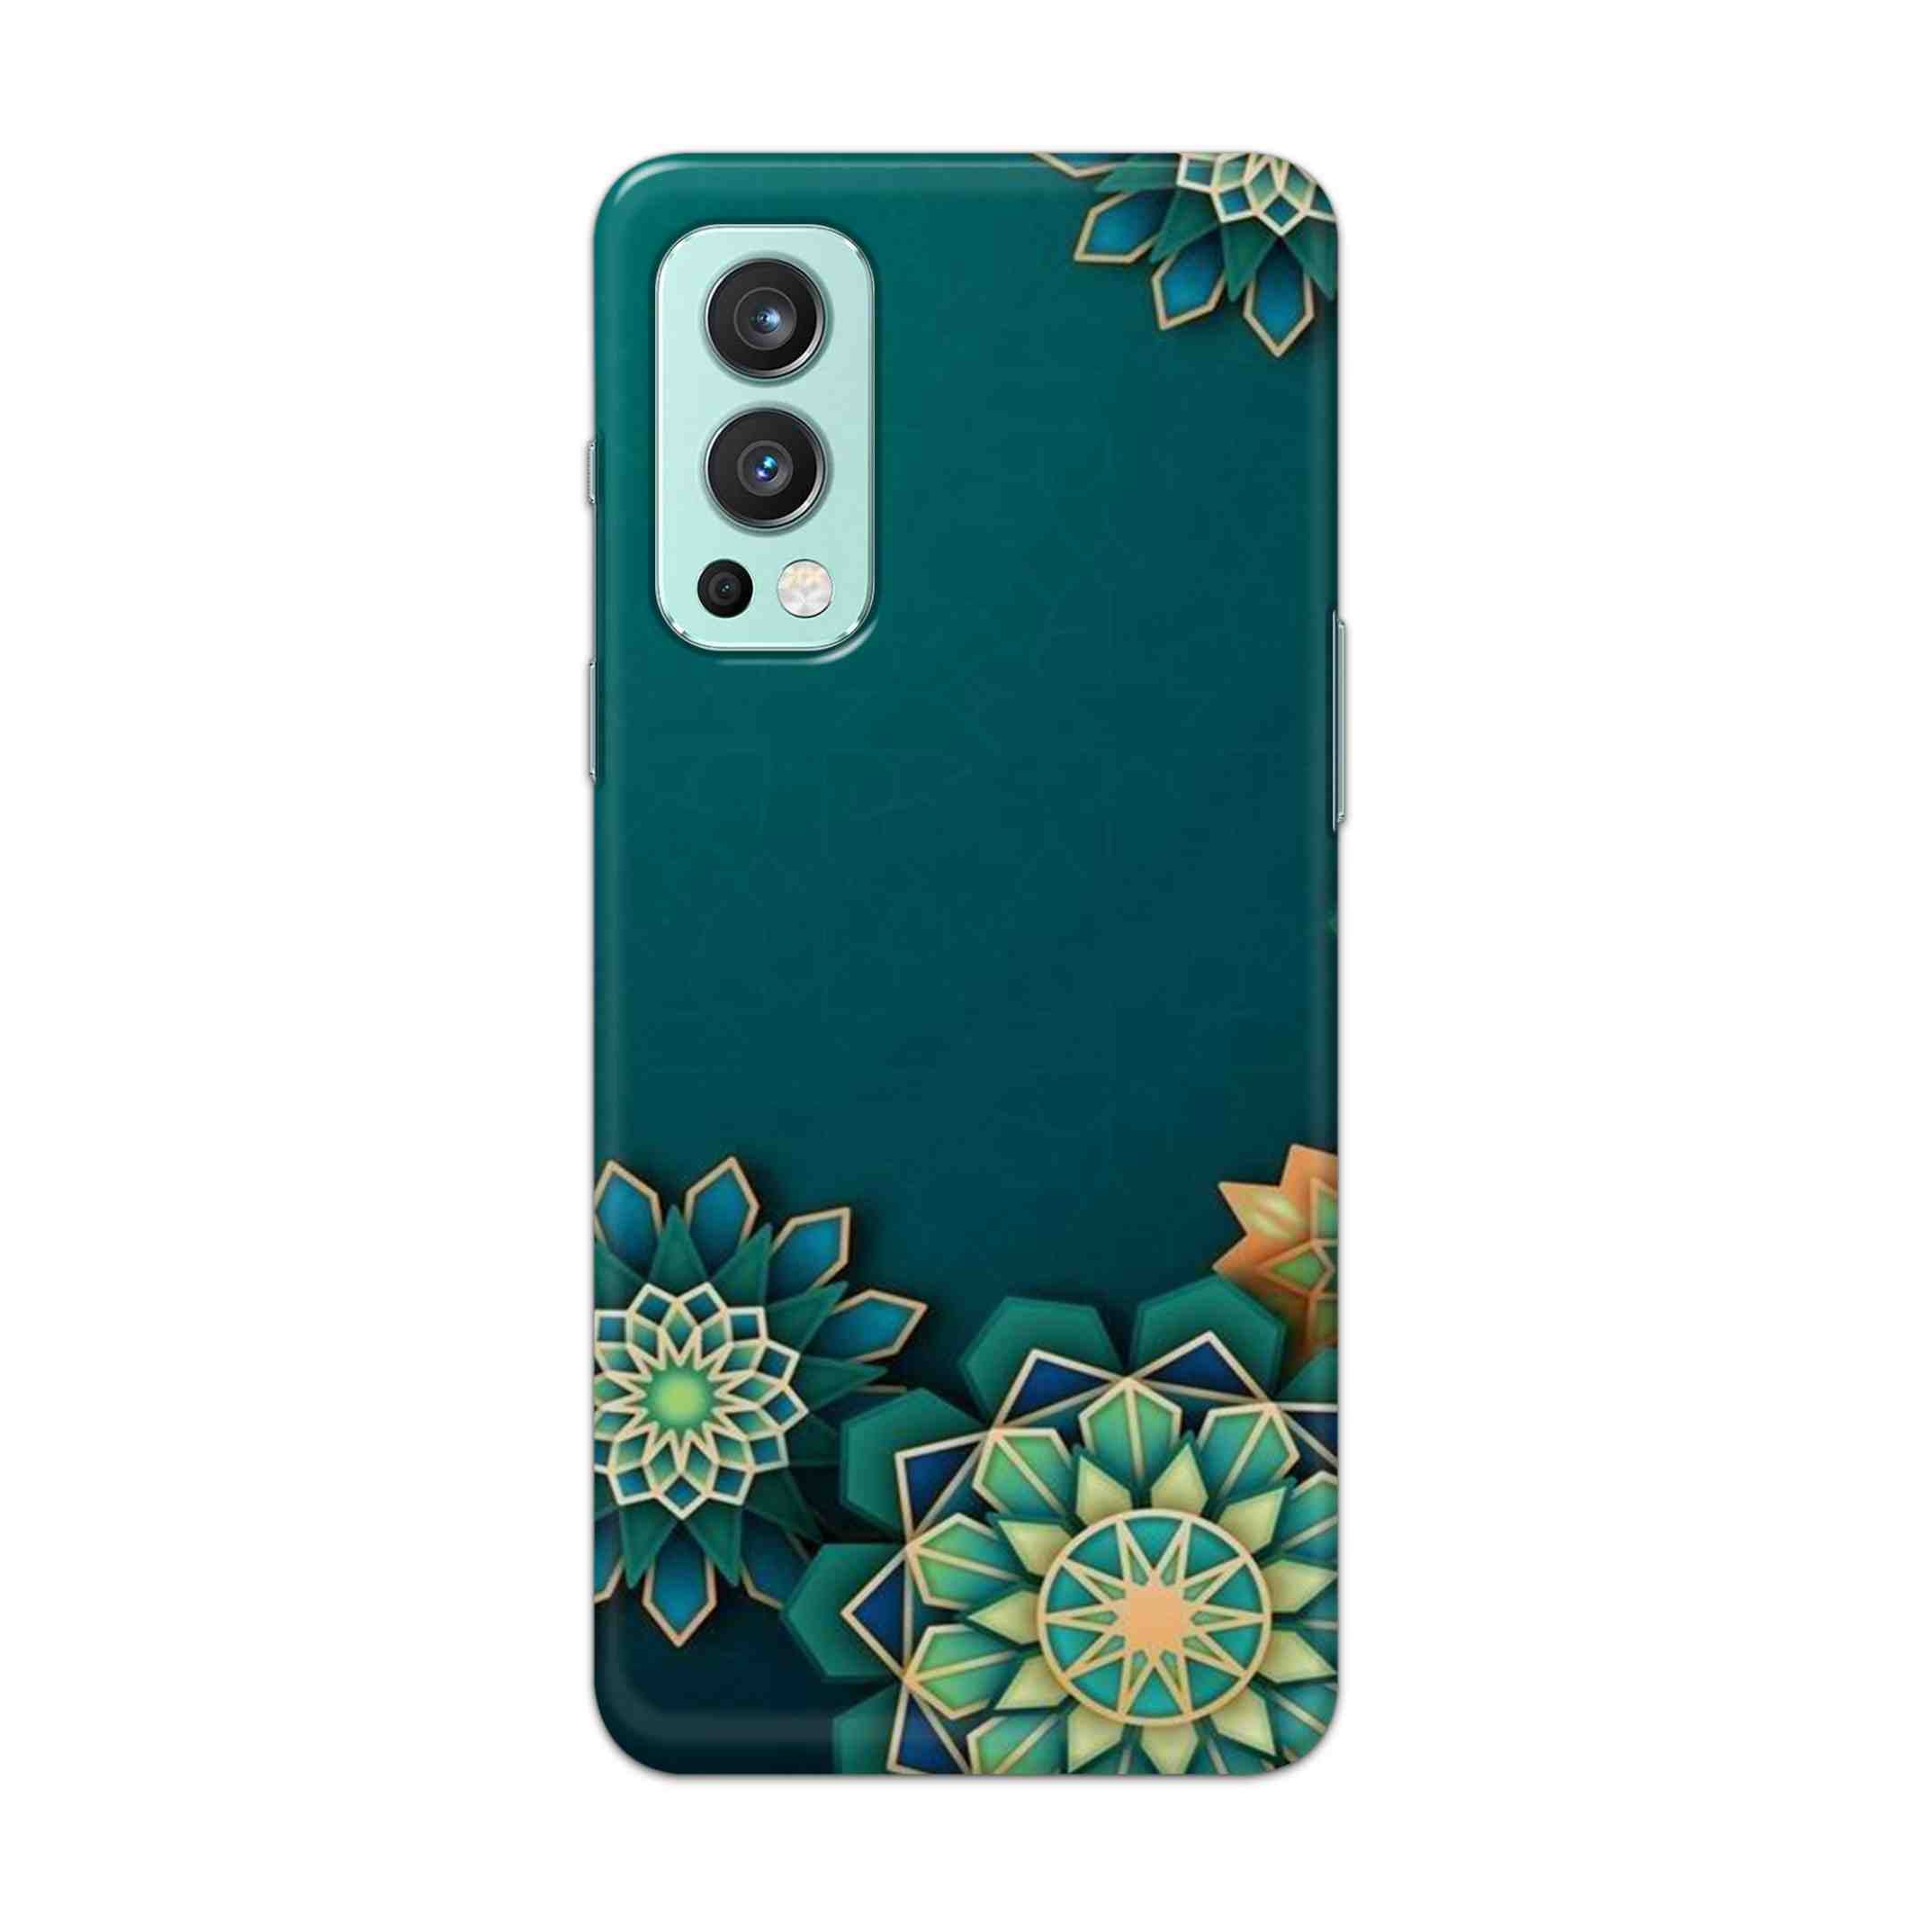 Buy Green Flower Hard Back Mobile Phone Case Cover For OnePlus Nord 2 5G Online